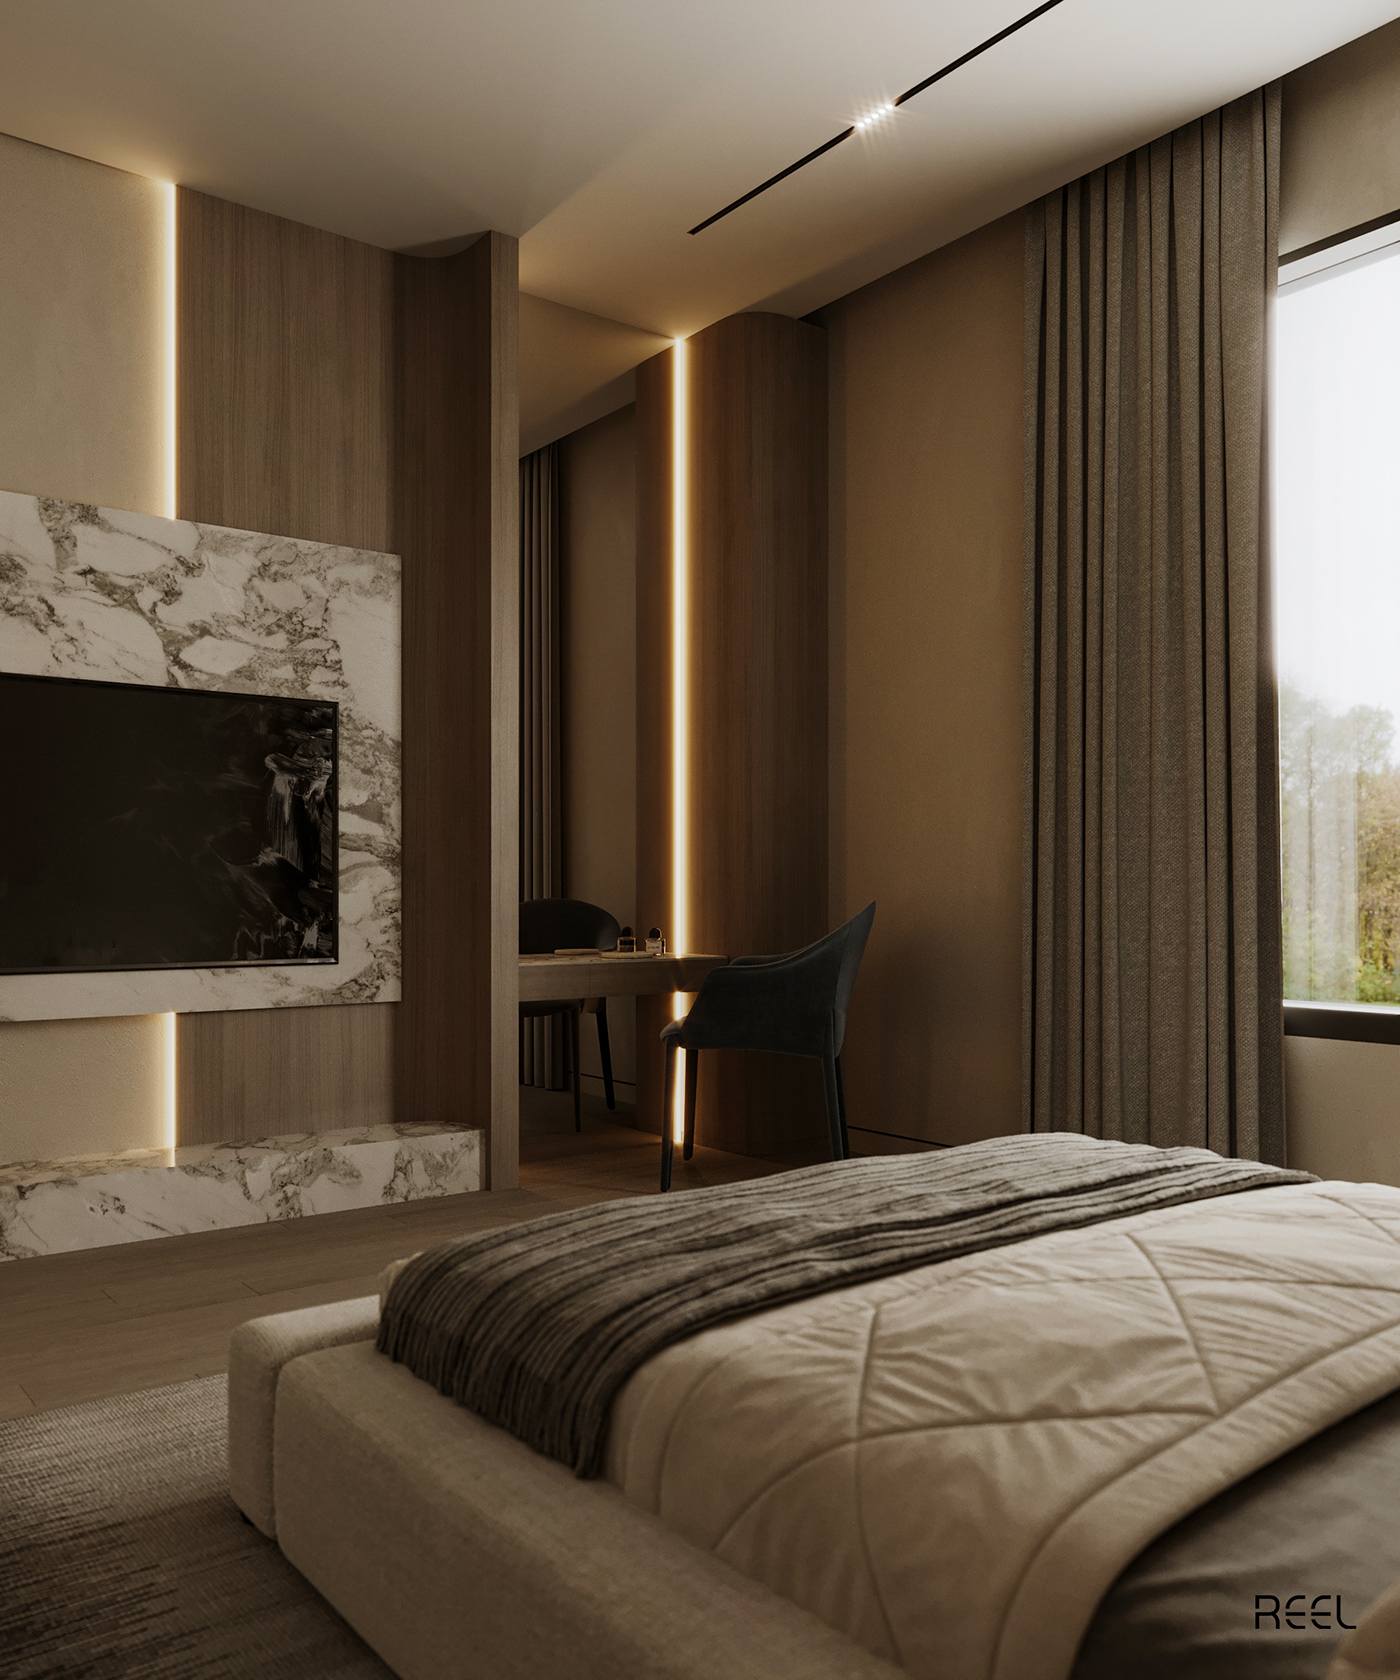 bed interior design  Render architecture modern 3D bedroom visualization 3ds max corona